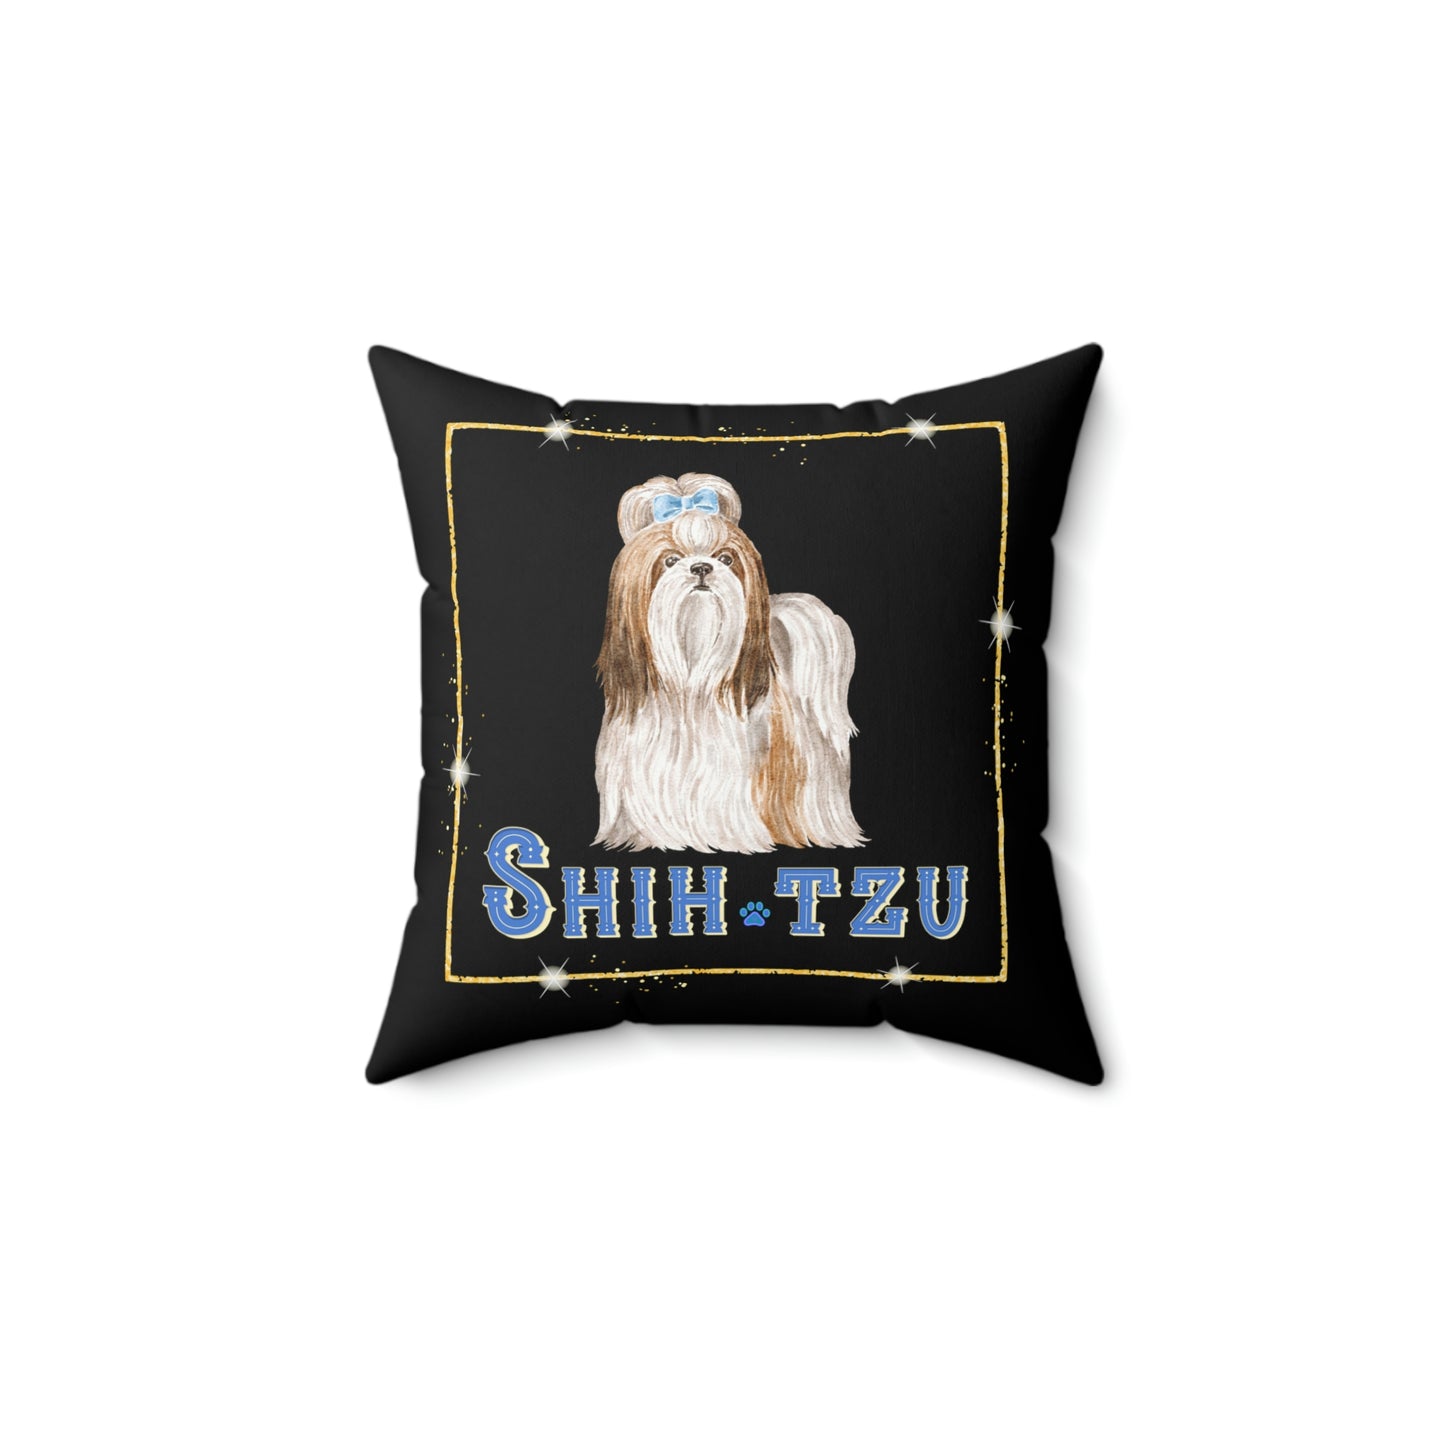 Beautiful Shih tzu Dog design Spun Polyester Square Indoor Pillow